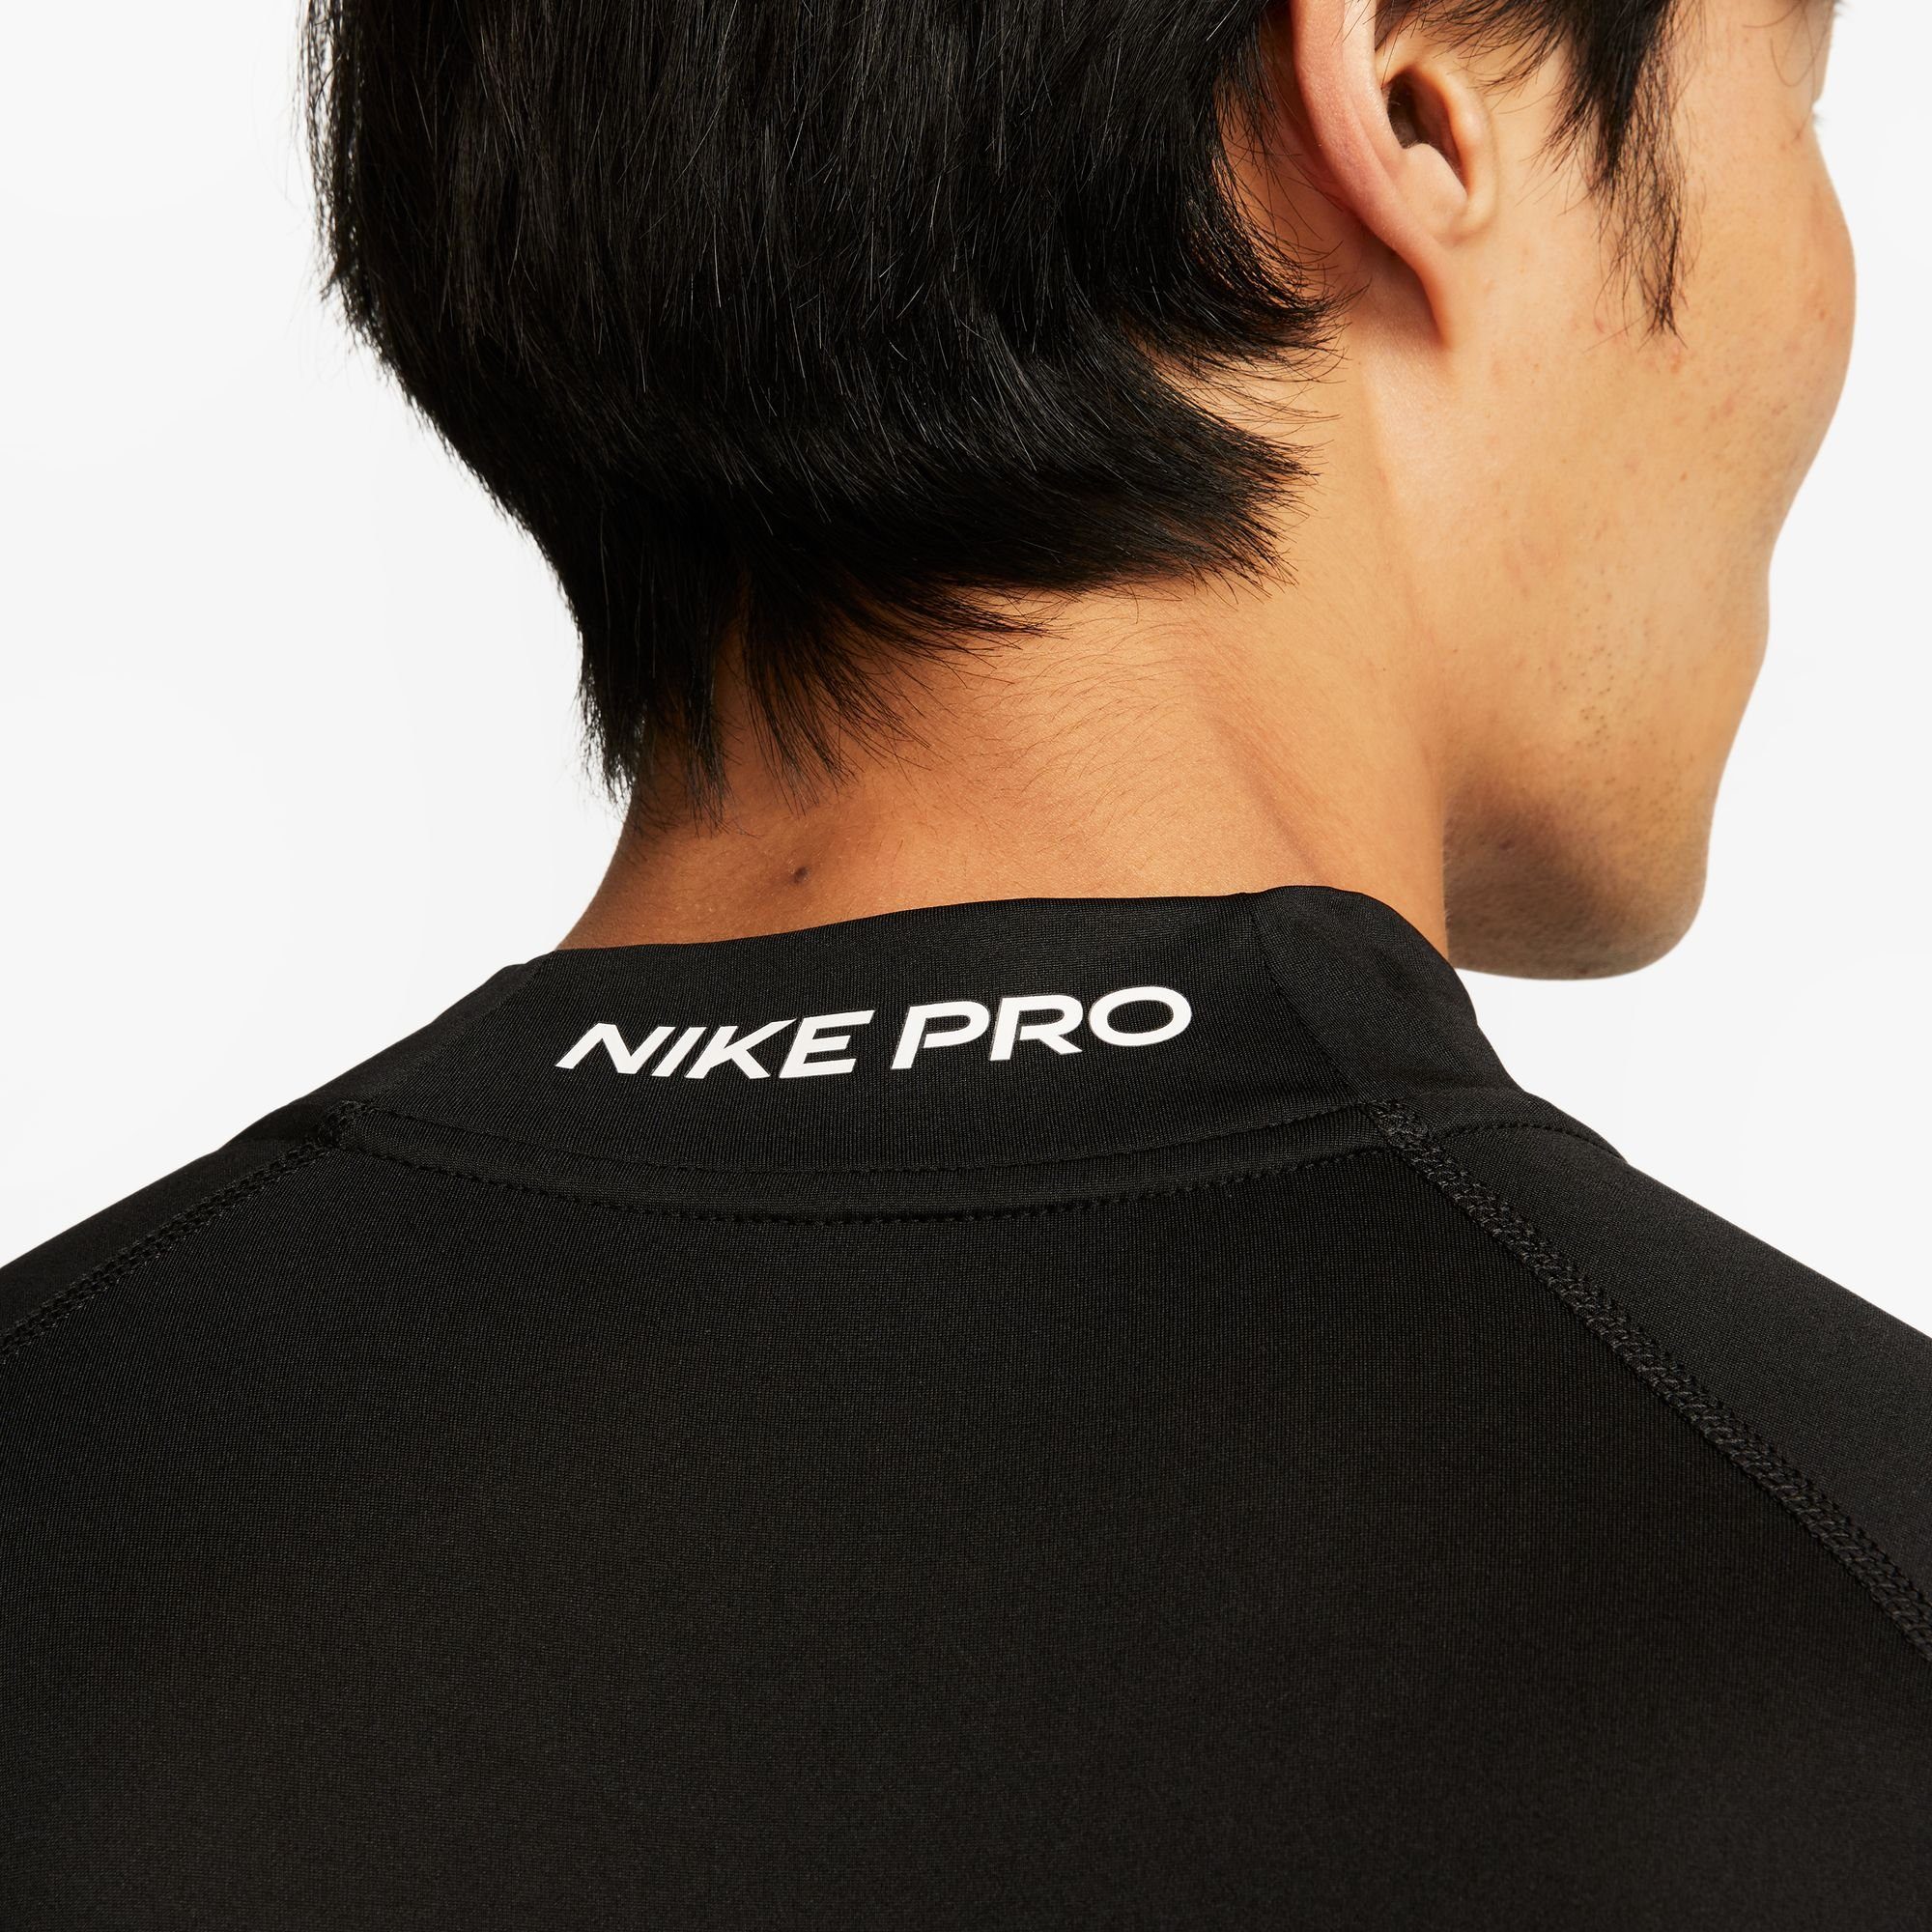 LONG-SLEEVE PRO MEN'S Nike MOCK-NECK Trainingsshirt TOP TIGHT-FITTING DRI-FIT